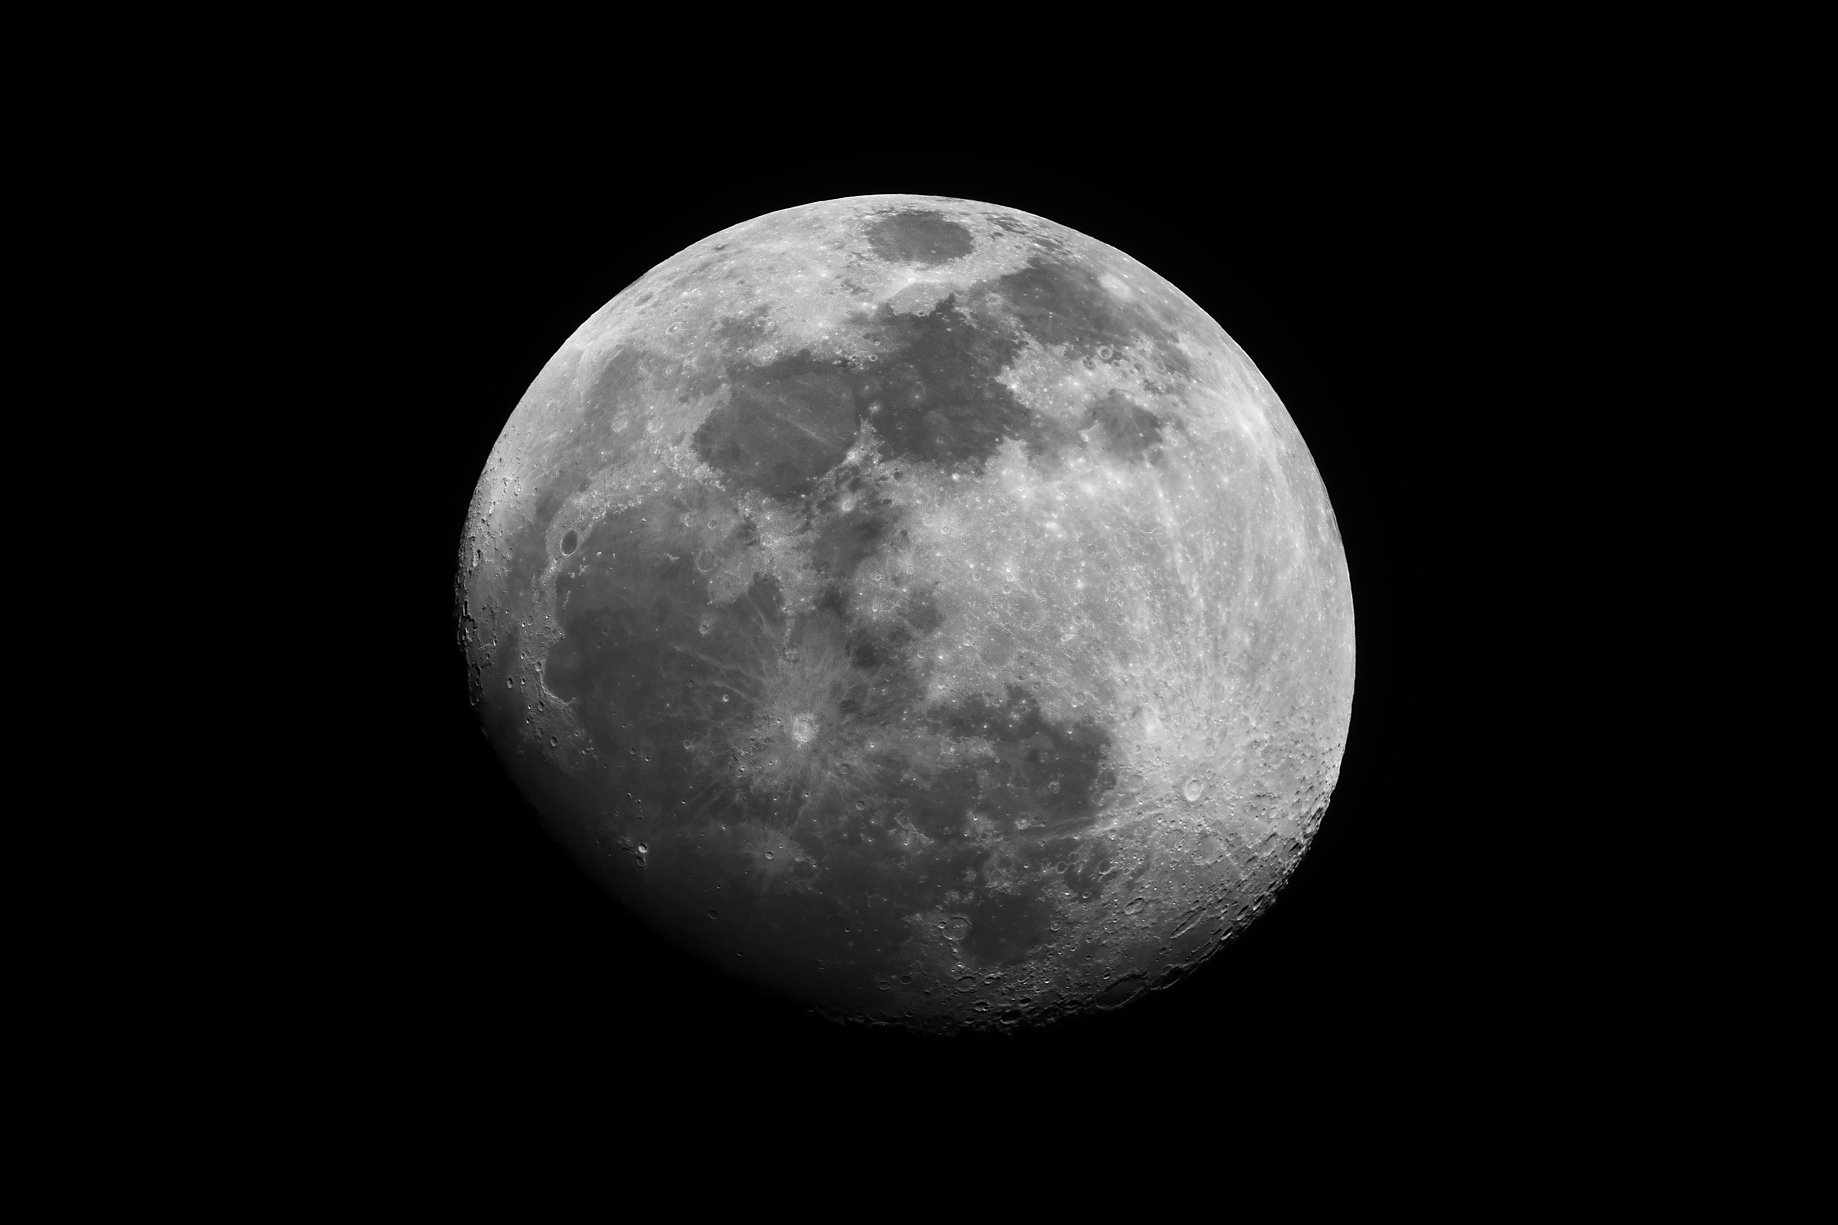 171003 - Lune gibbeuse - Pollux - STL11K